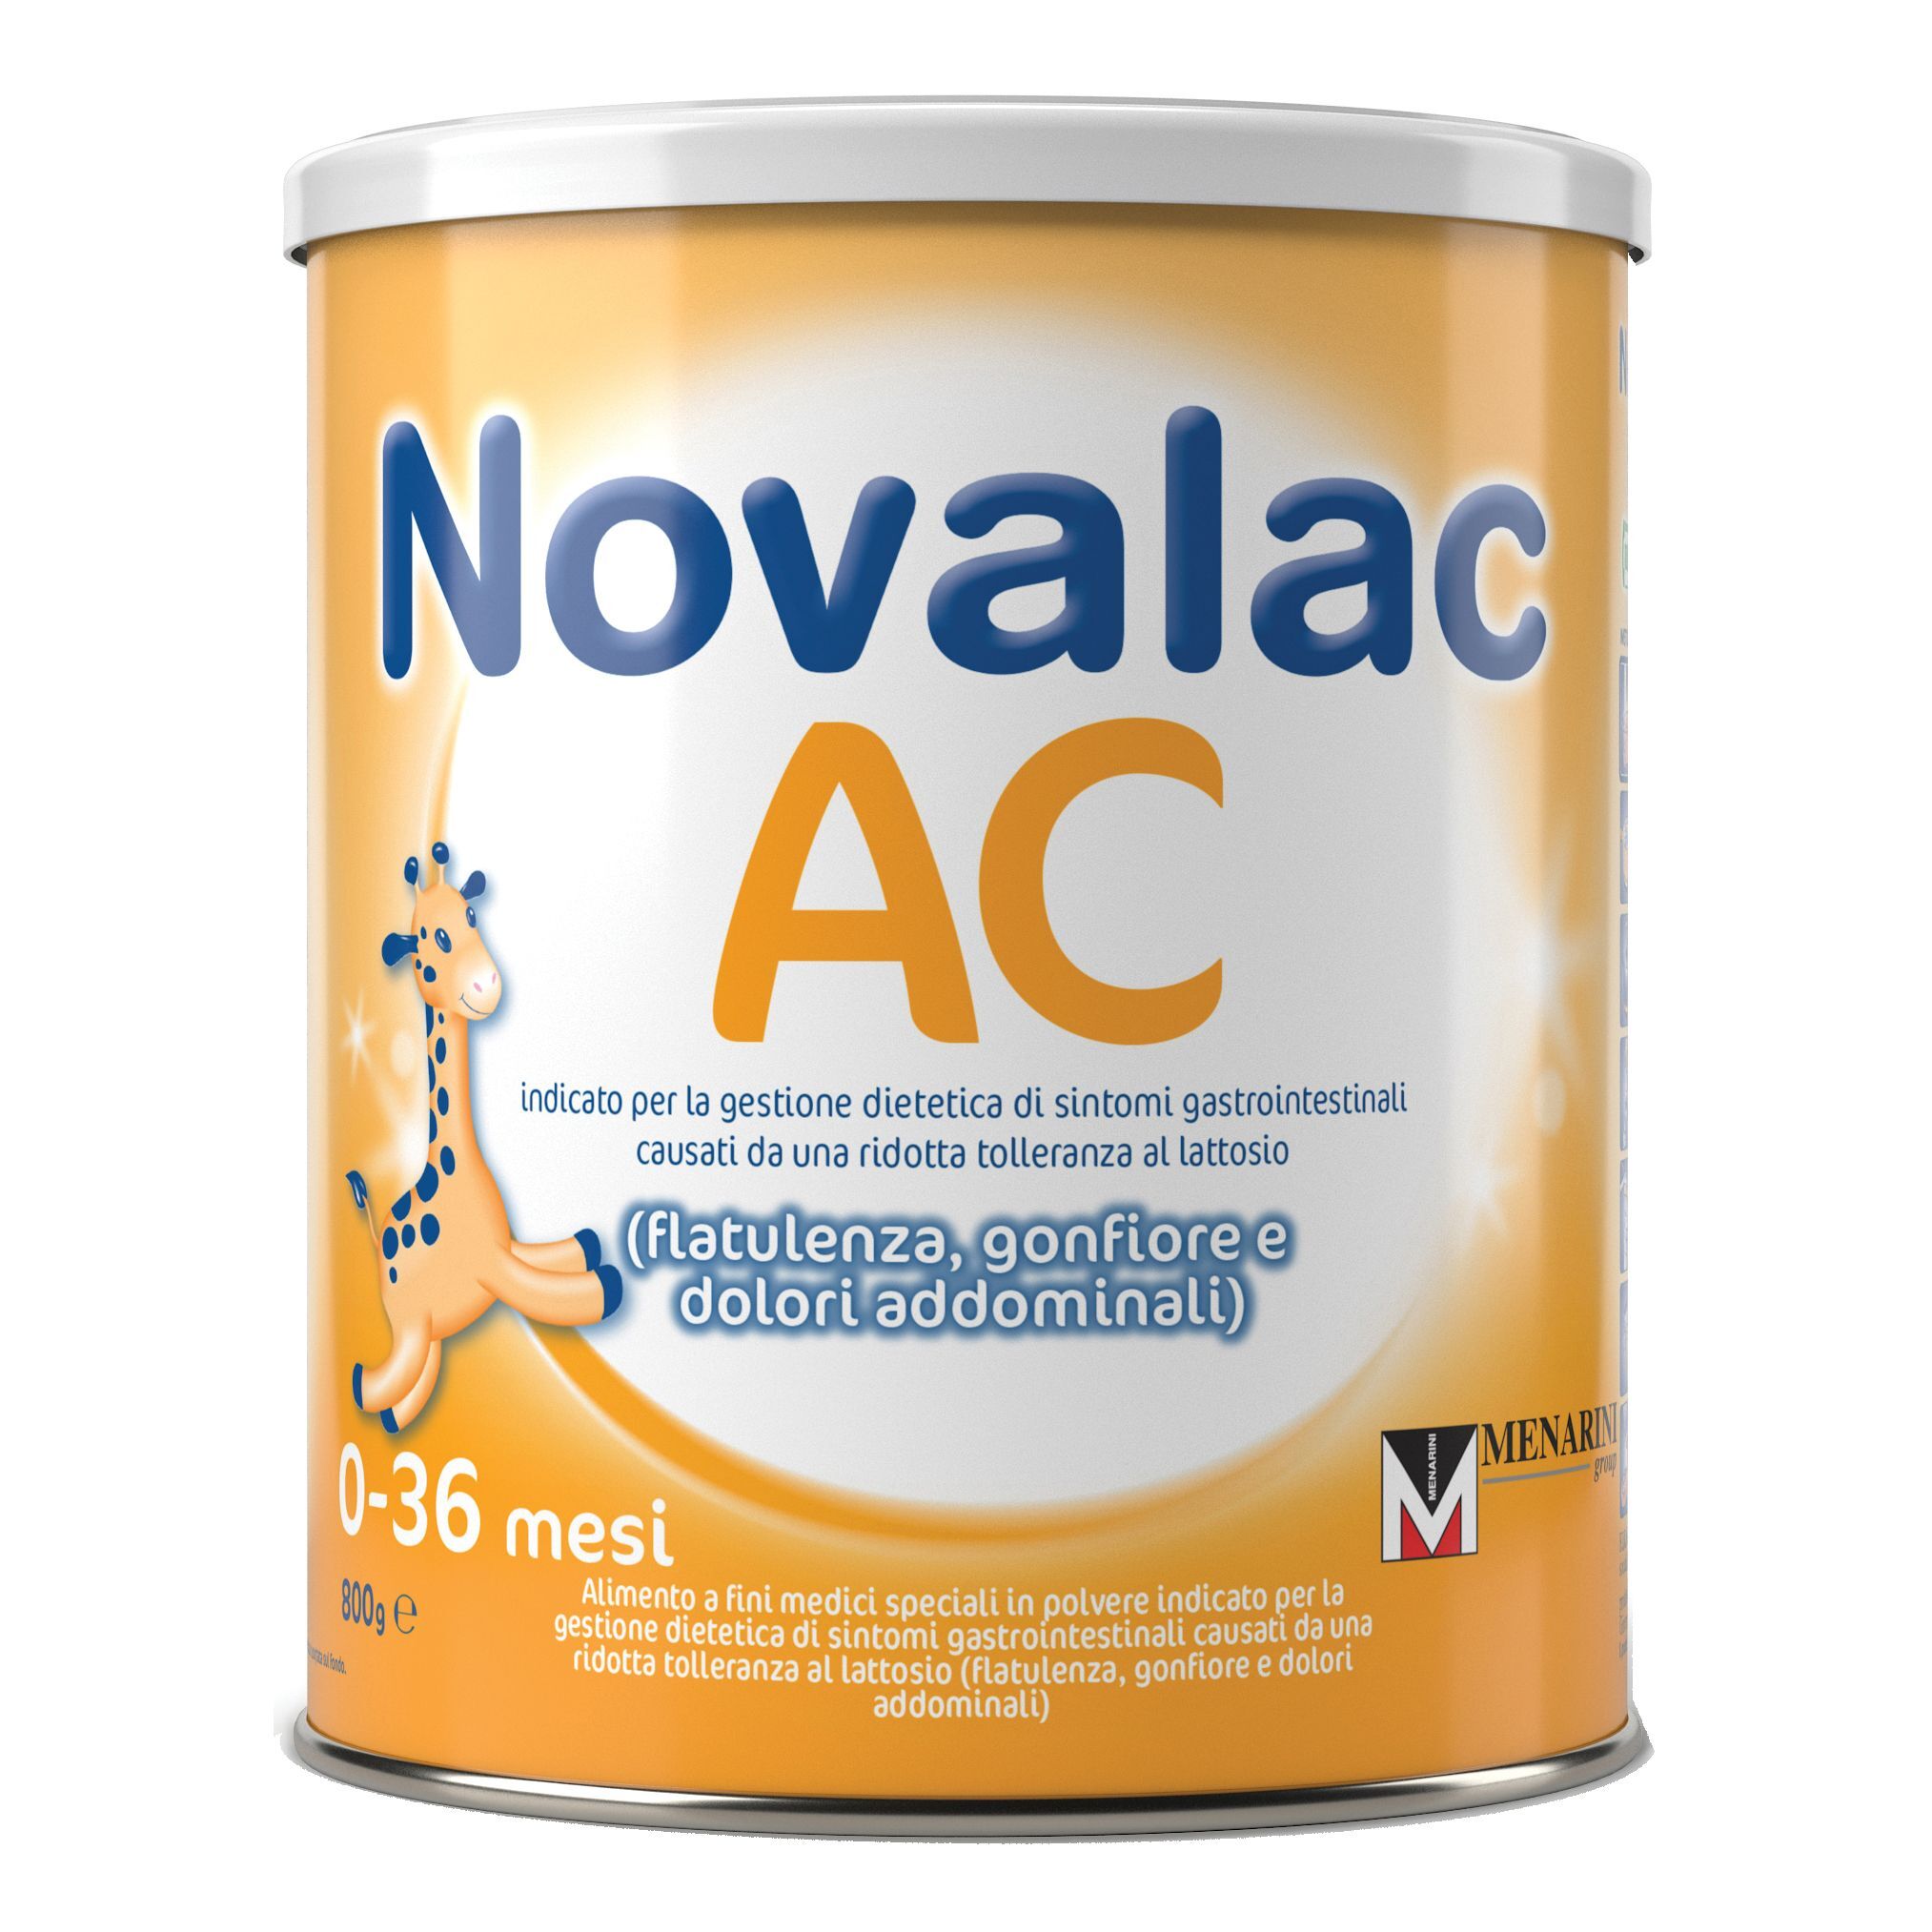 Novalac Ac 0-36 Mesi 800g